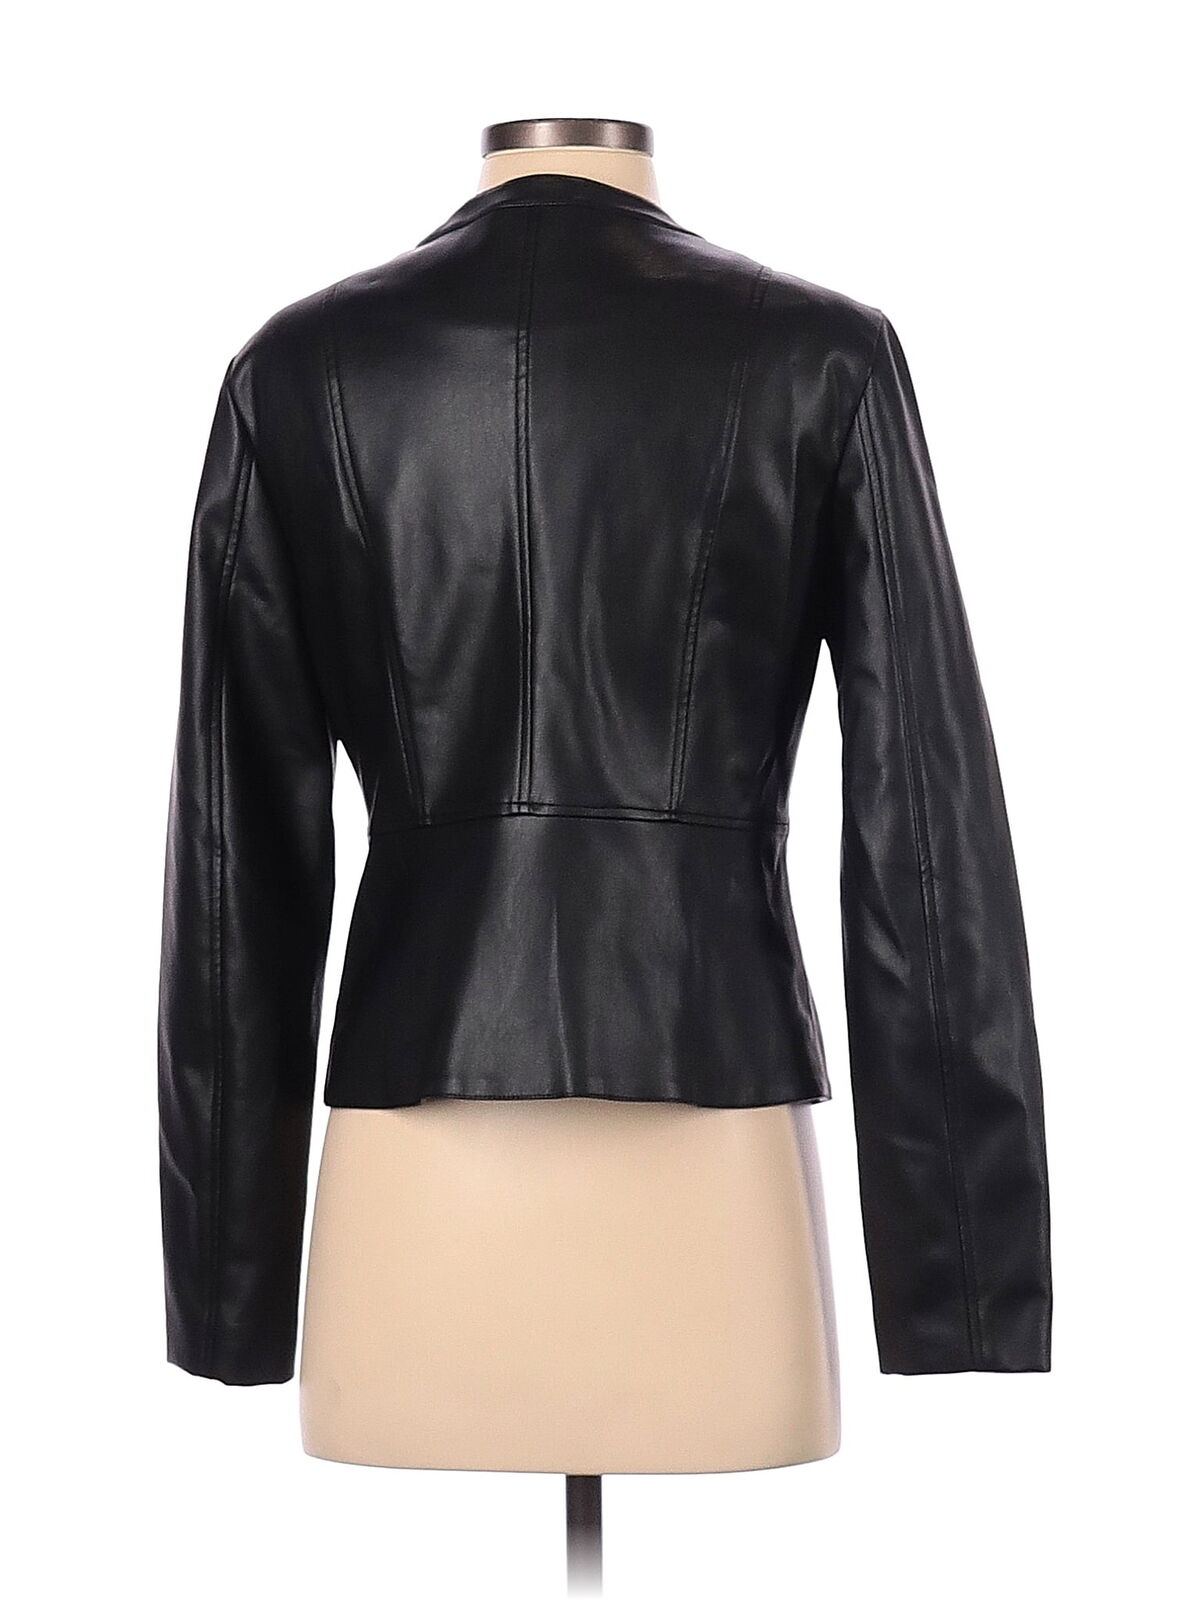 T Tahari Women Black Faux Leather Jacket 4 - image 2